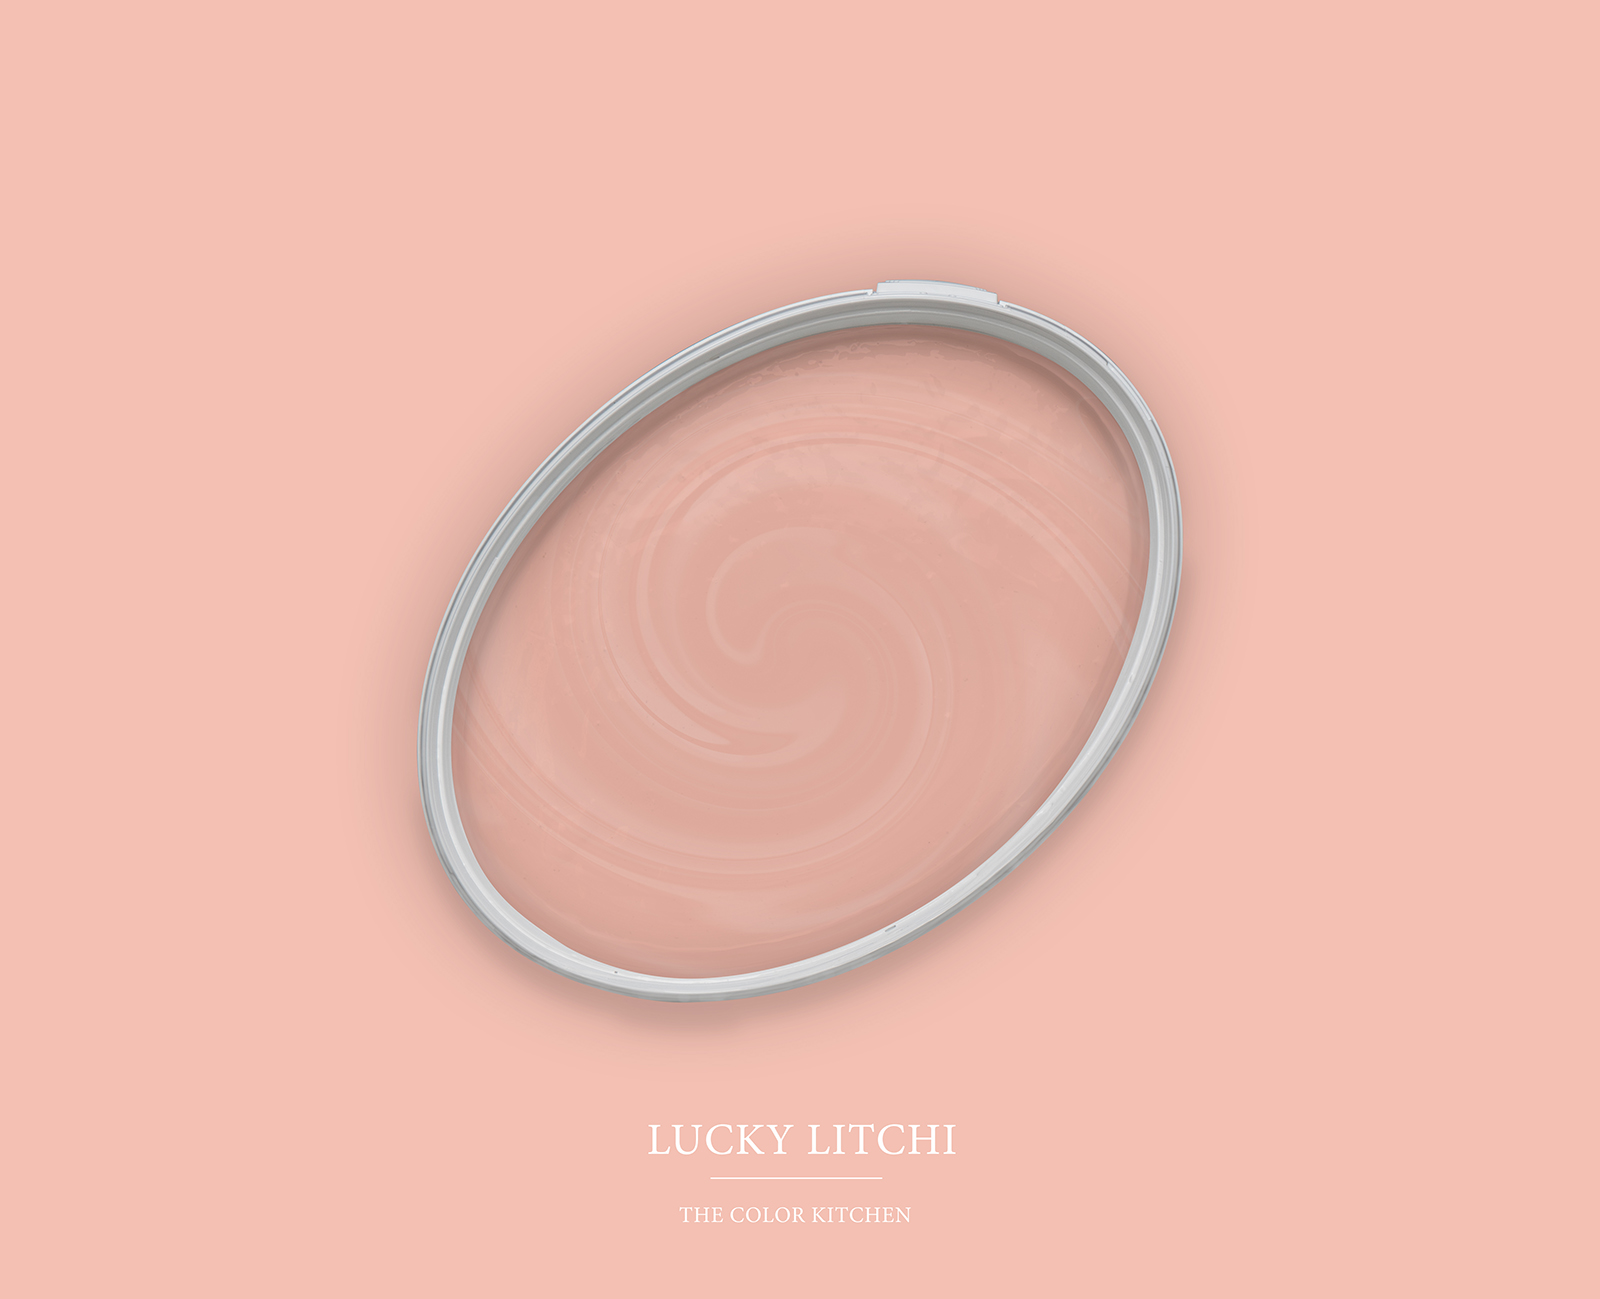         Wandfarbe in hellem Rosa »Lucky Litchi« TCK7003 – 2,5 Liter
    